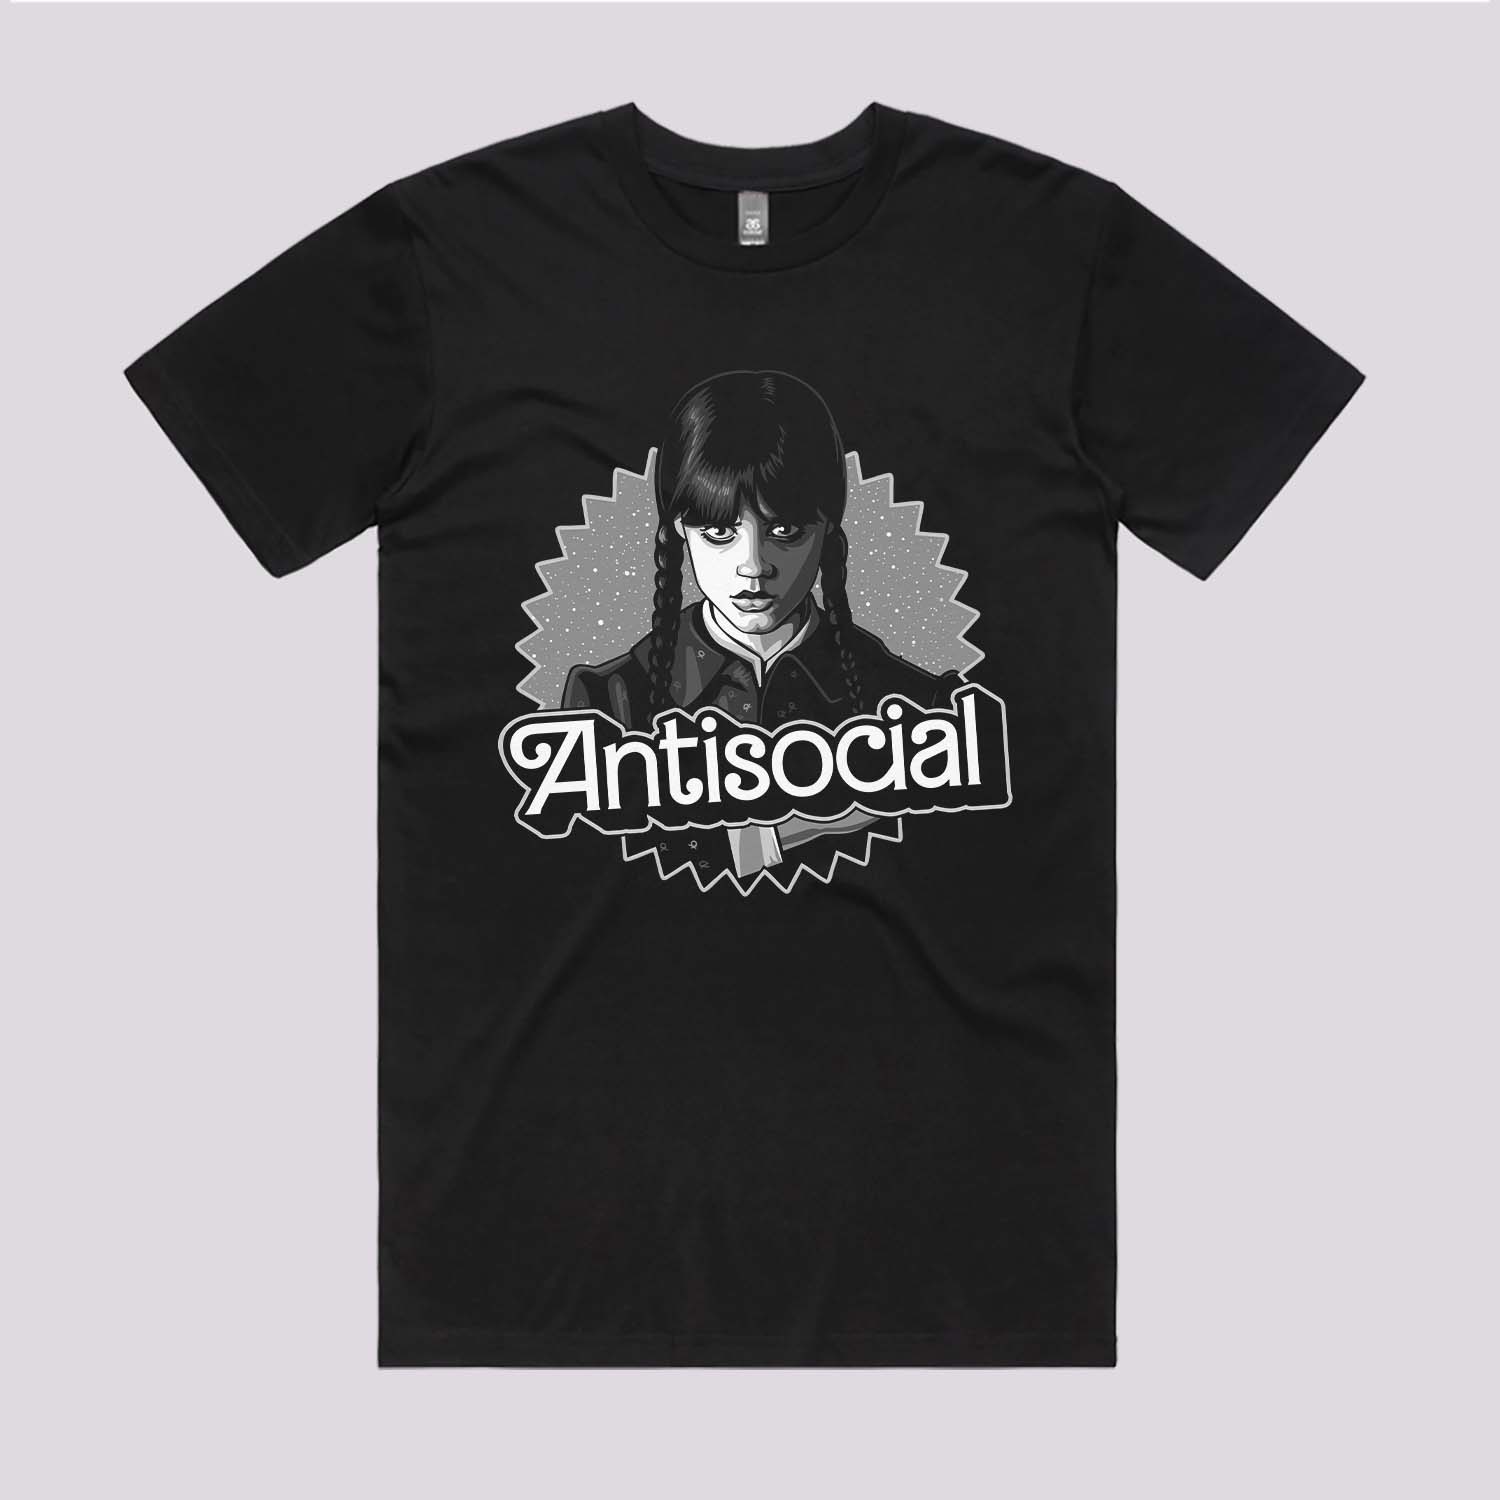 Antisocial Barb T-Shirt